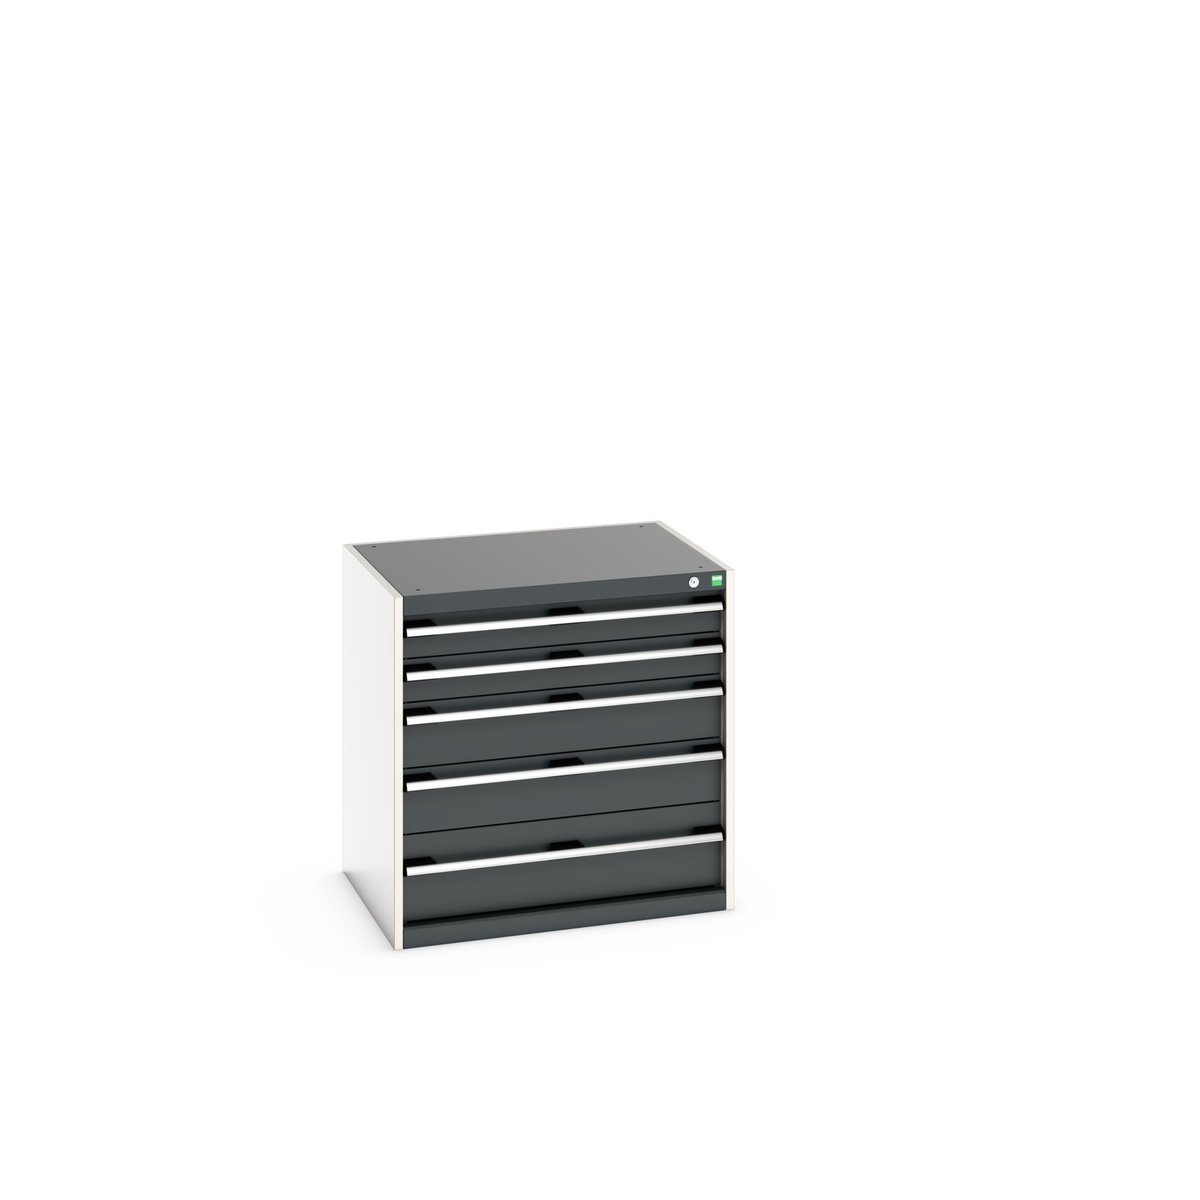 40020026. - cubio drawer cabinet